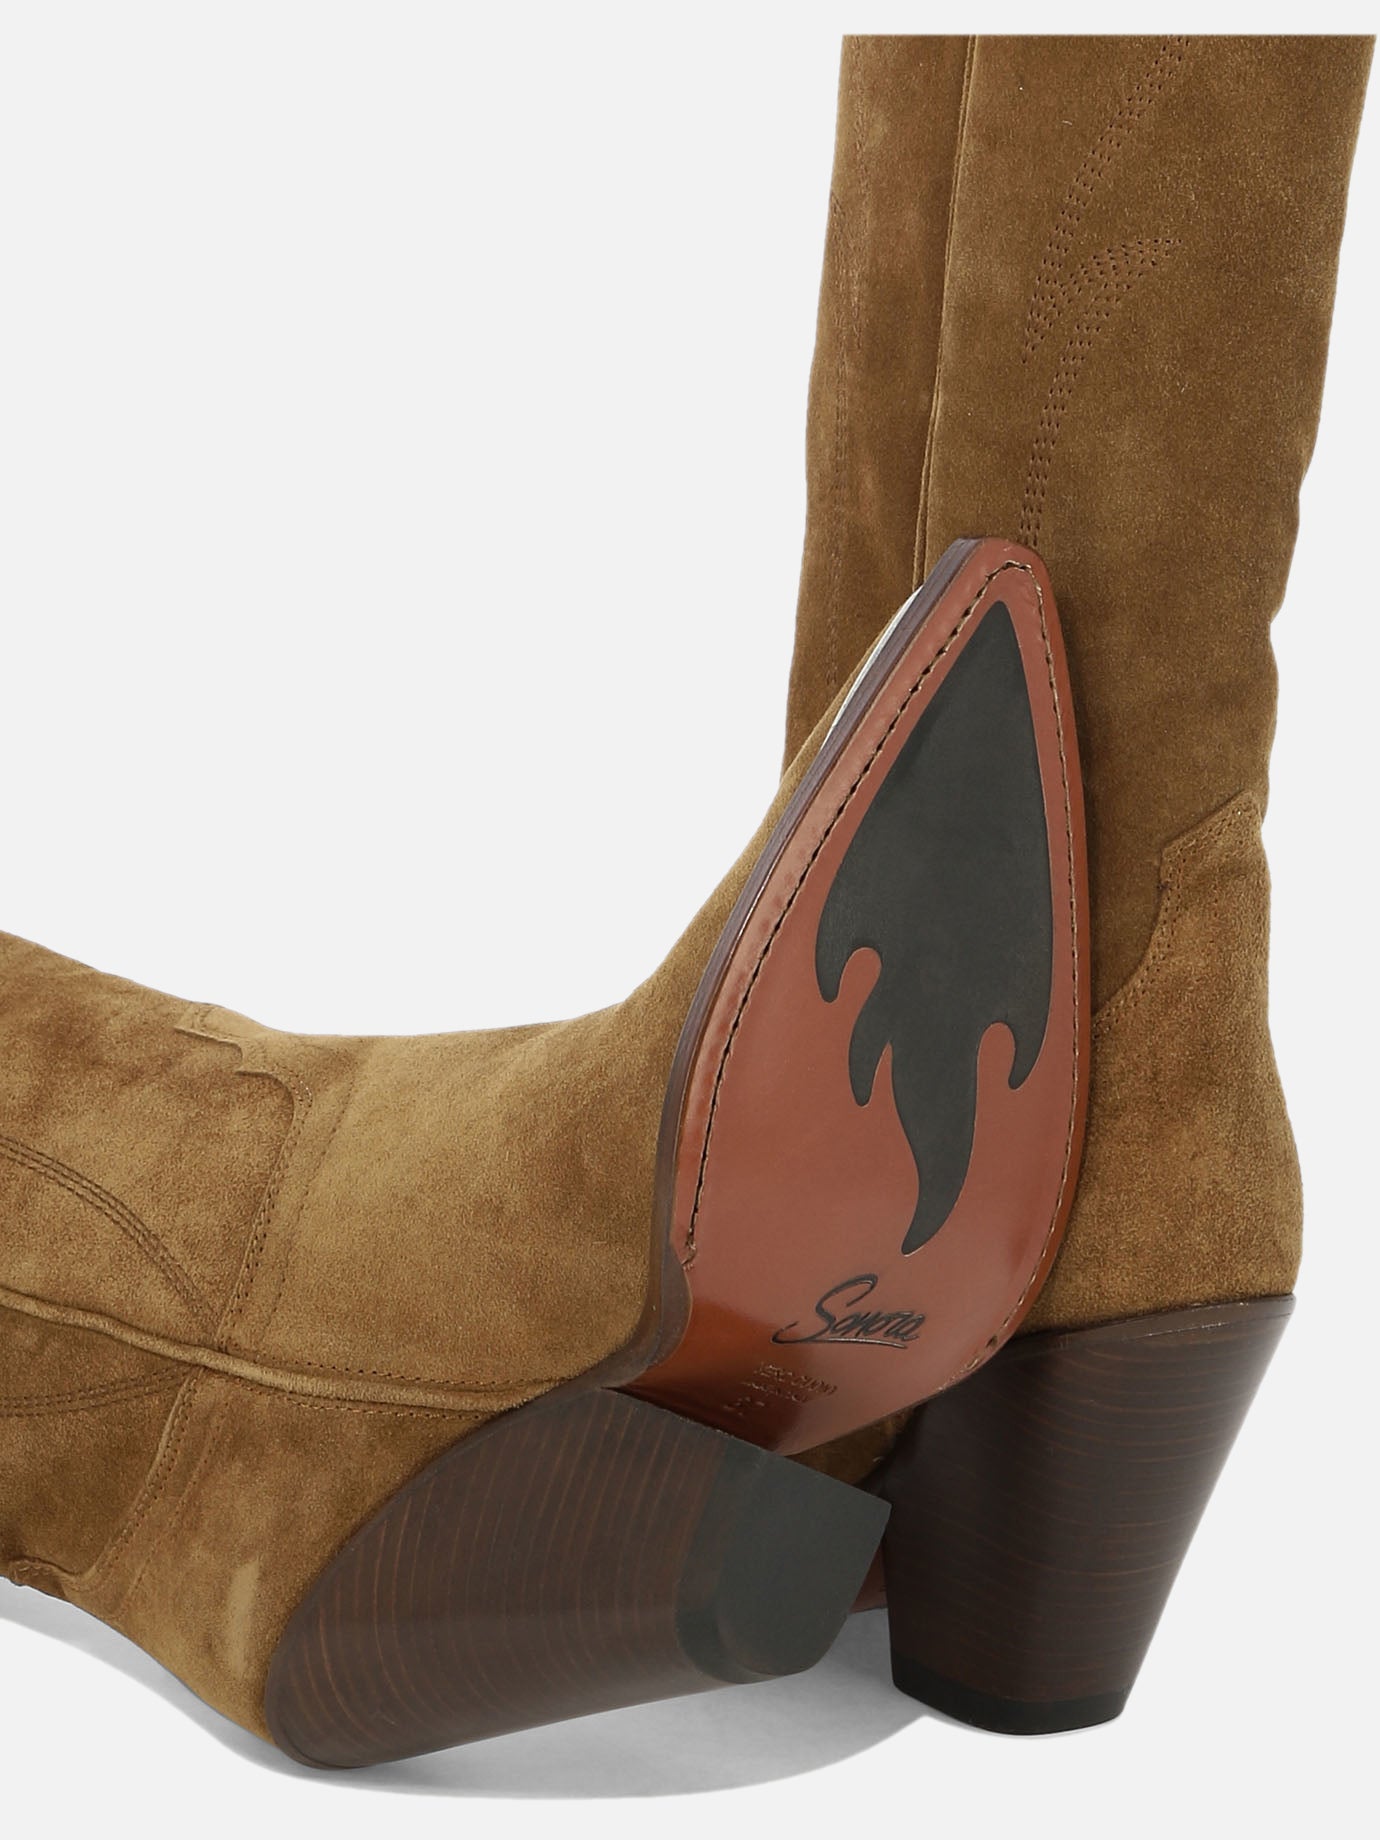 "Rancho" boots